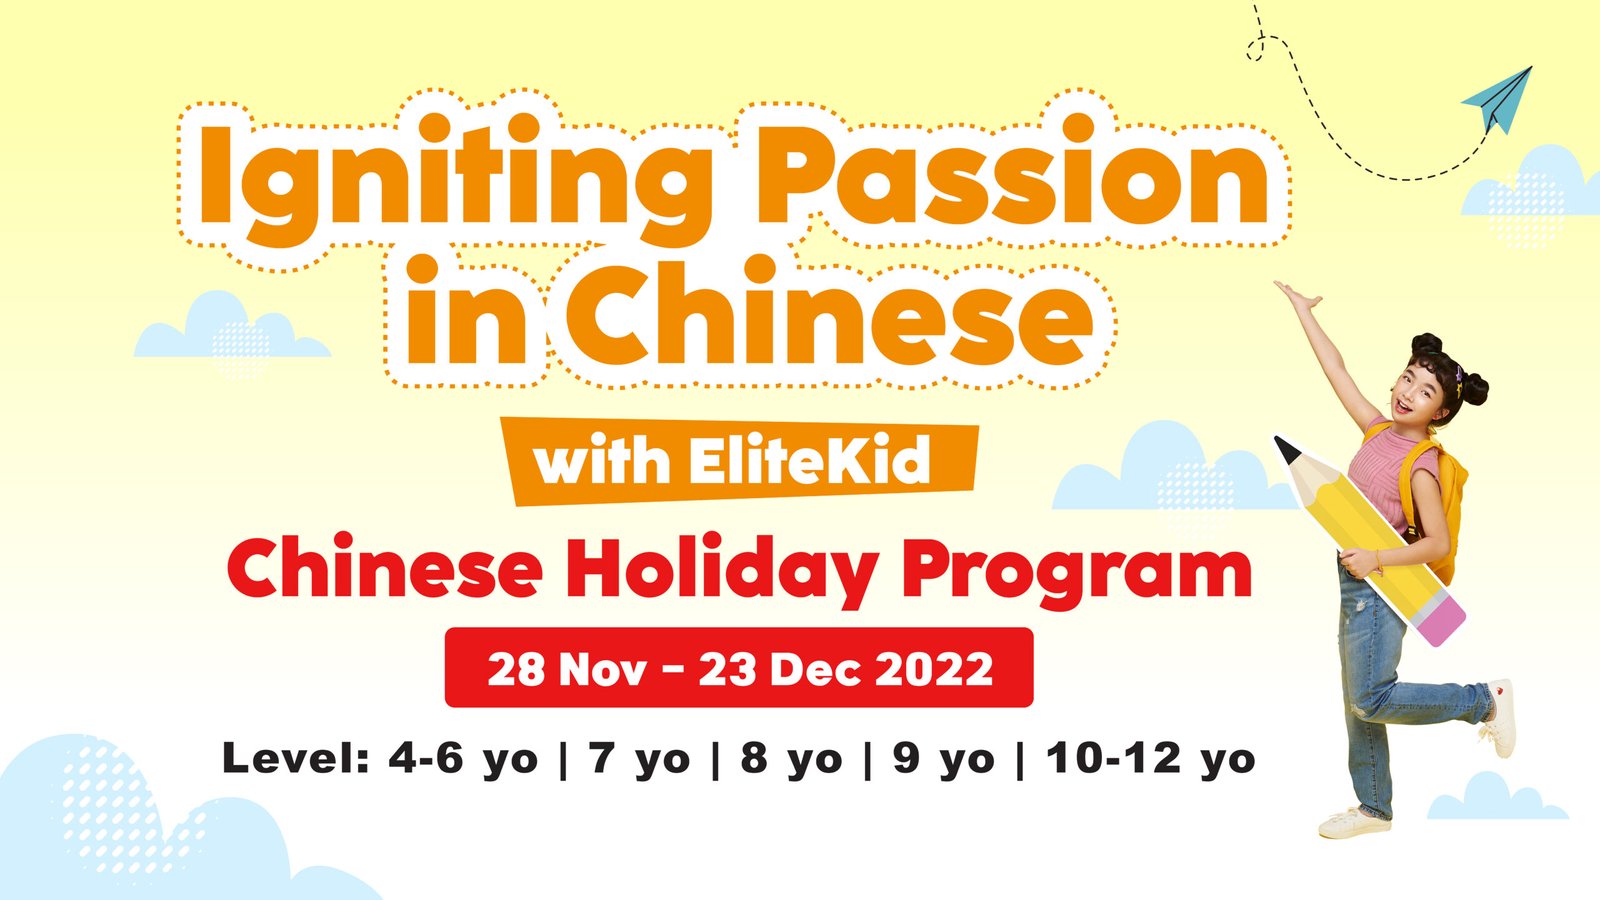 elitekid december chinese holiday program enrichment-mobile banner